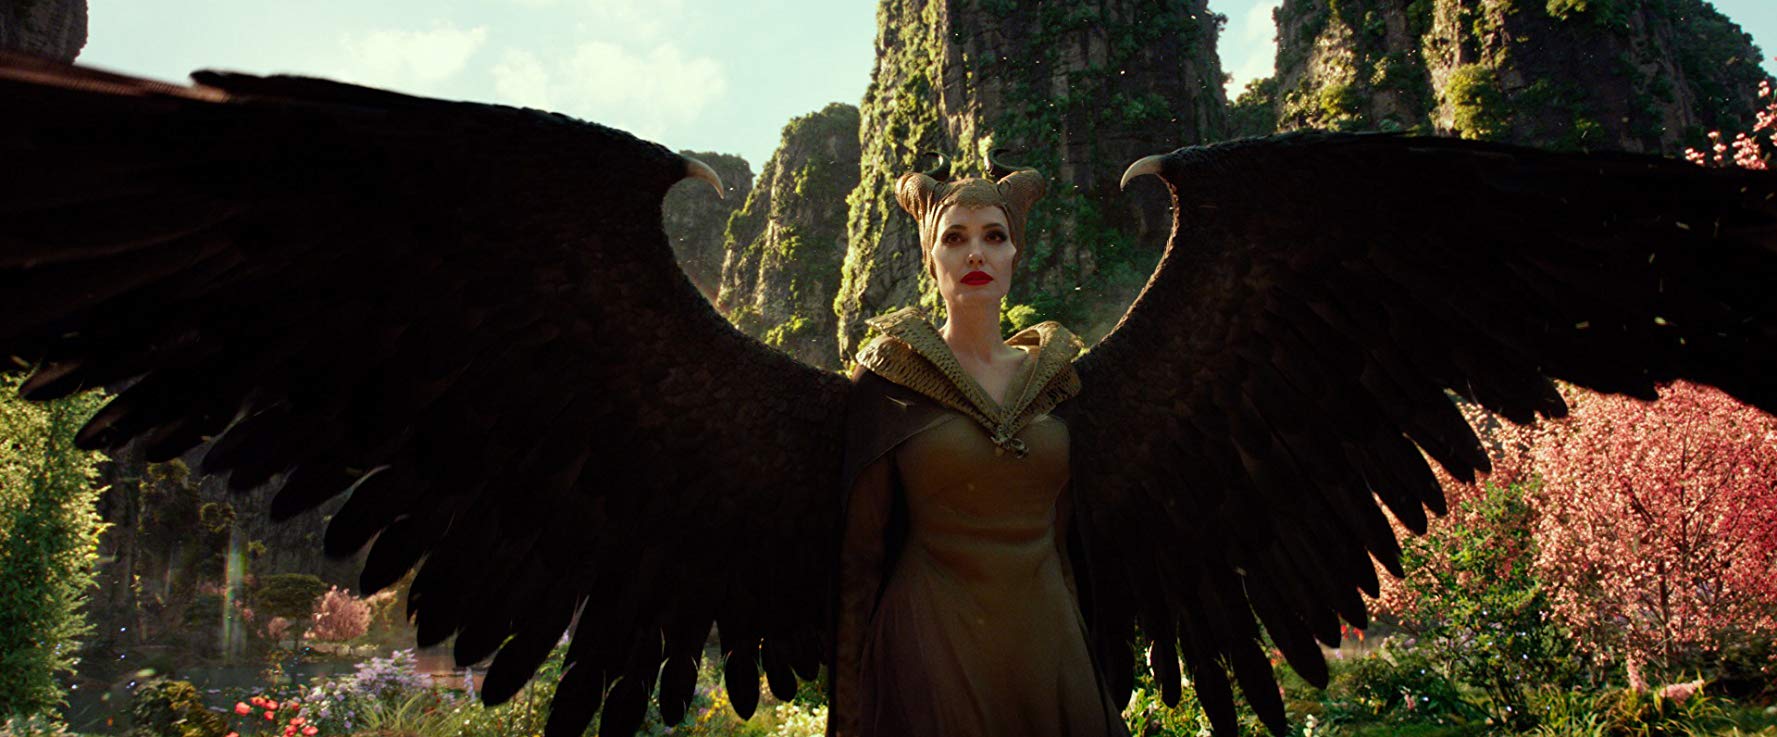 REVIEW##] Maleficent: Mistress of Evil (2019) มาเลฟิเซนต์: นางพญาปีศาจ | มนต์รัก "แม่เลี้ยง vs. แม่ผัว" [ไร้ส้มป่อย] - Pantip